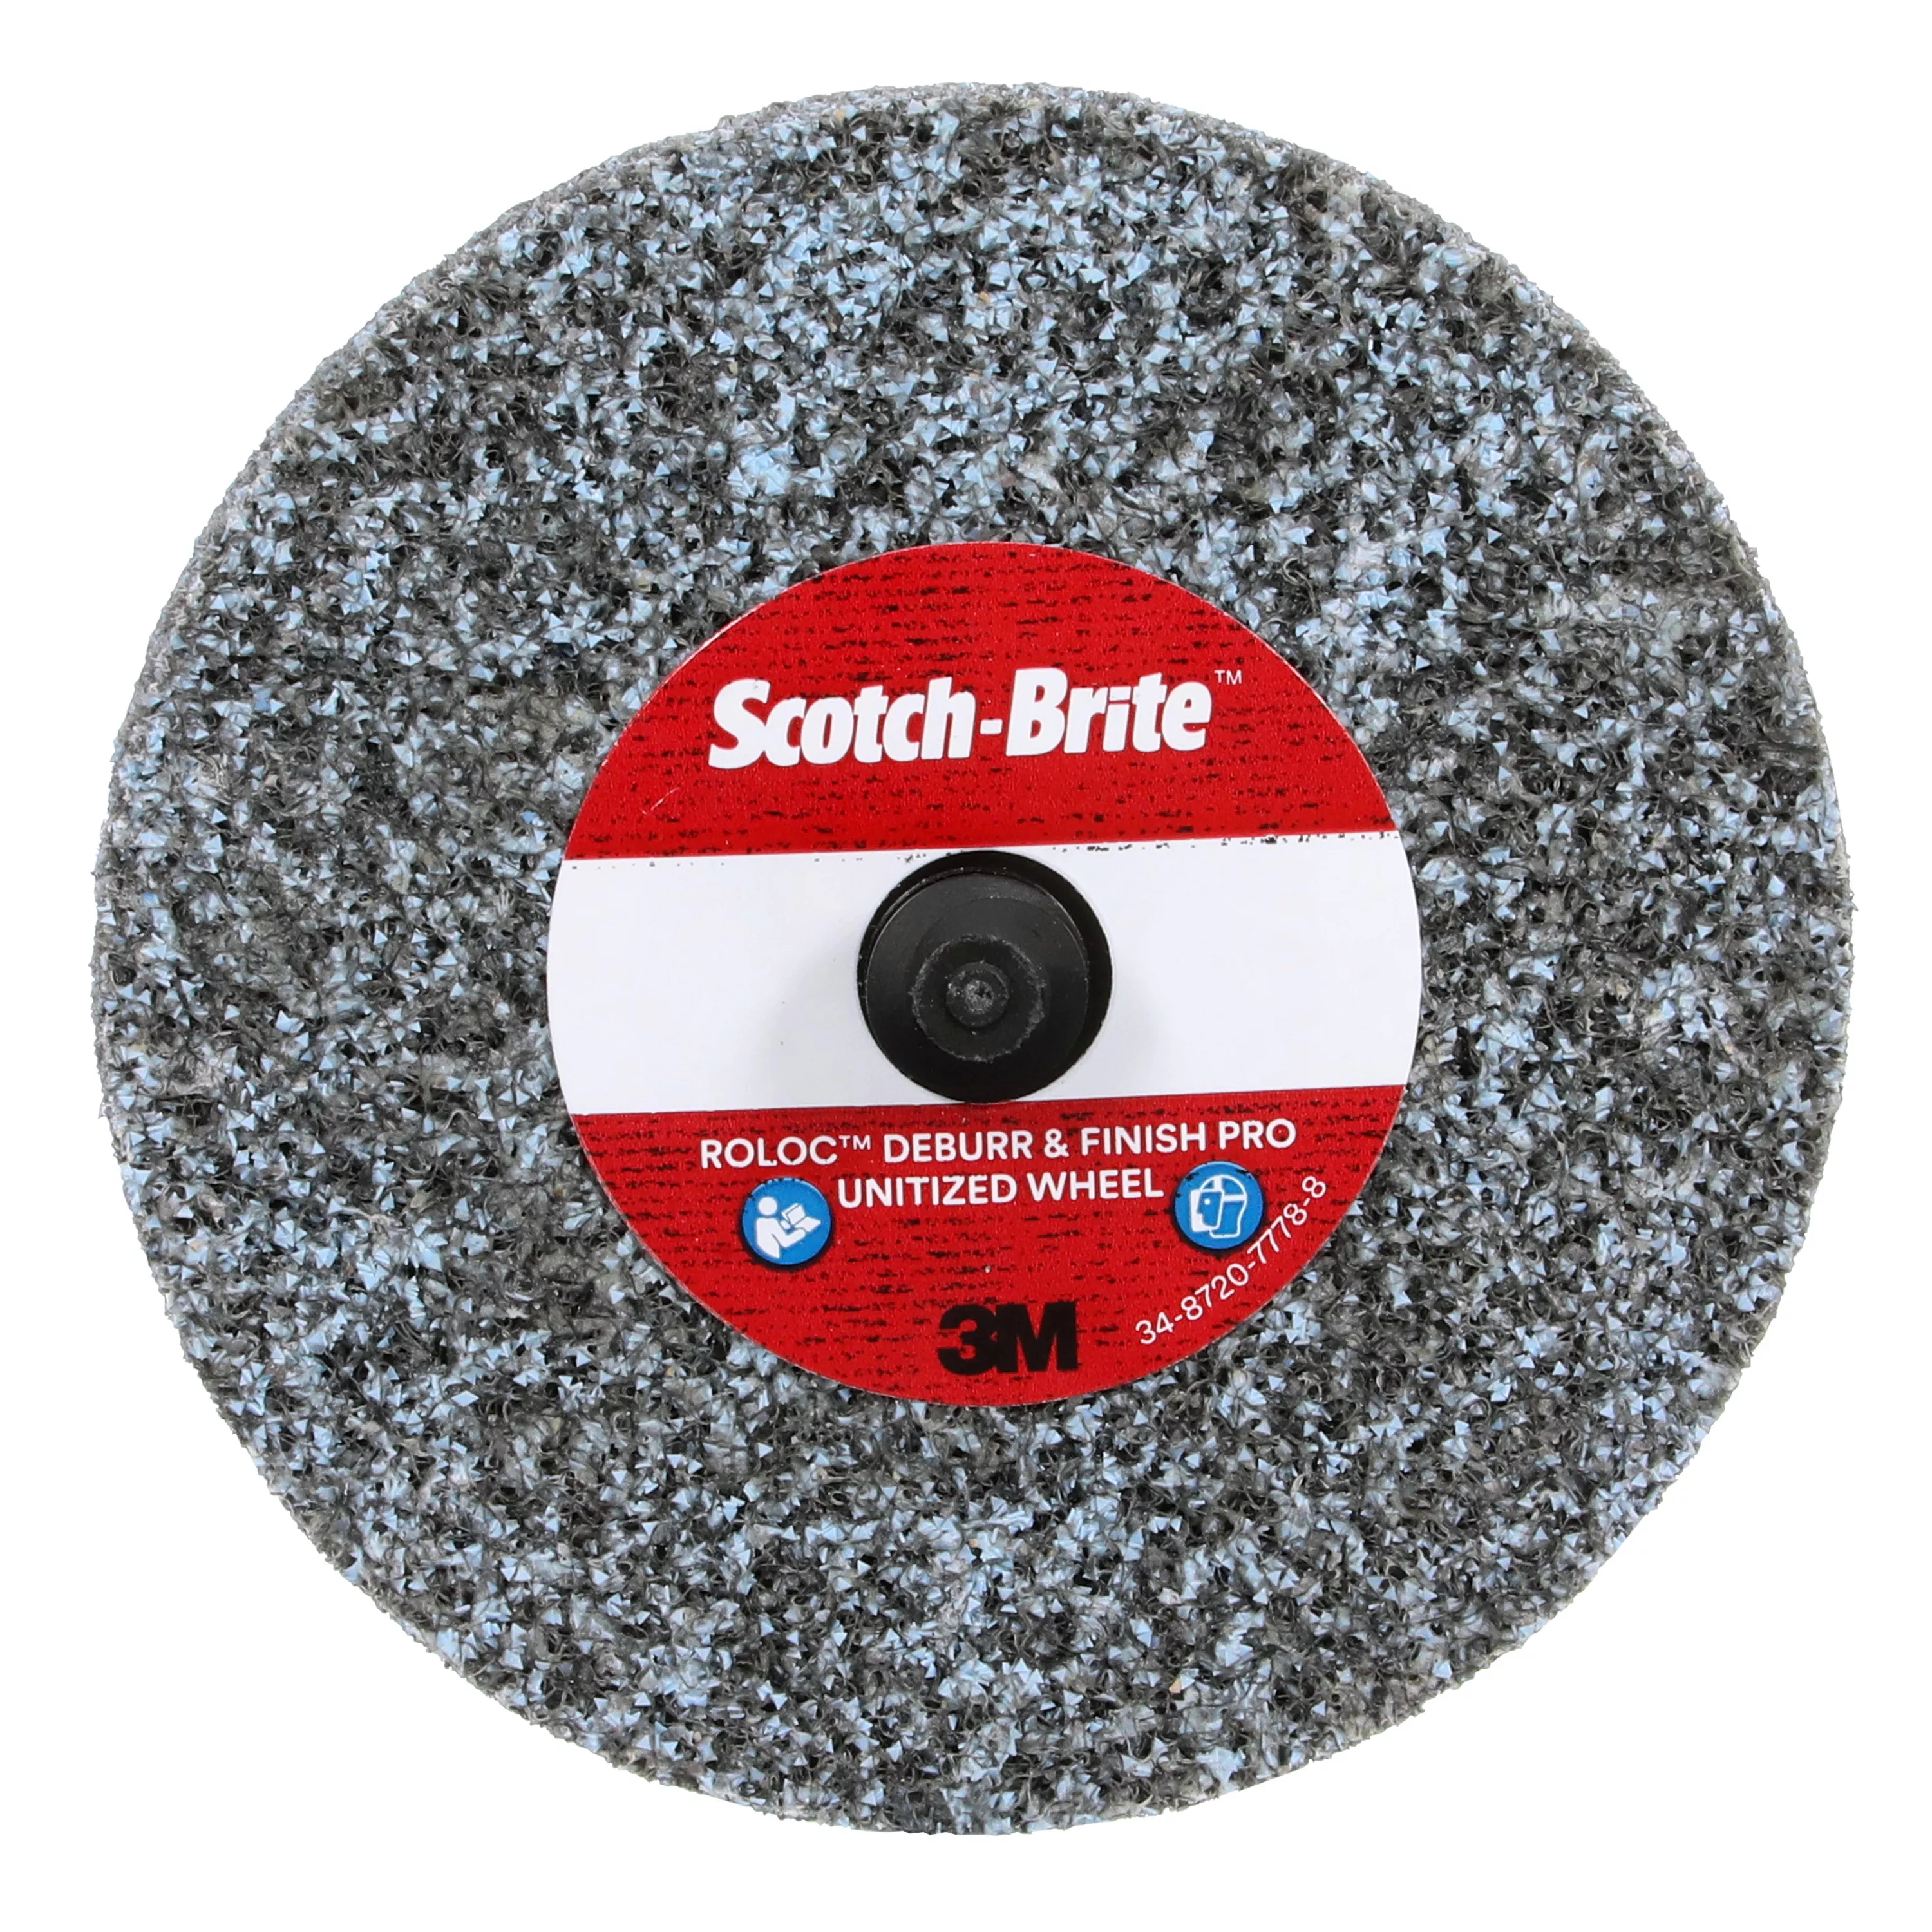 SKU 7010295274 | Scotch Brite™ Roloc™ Deburr & Finish PRO Unitized Wheel